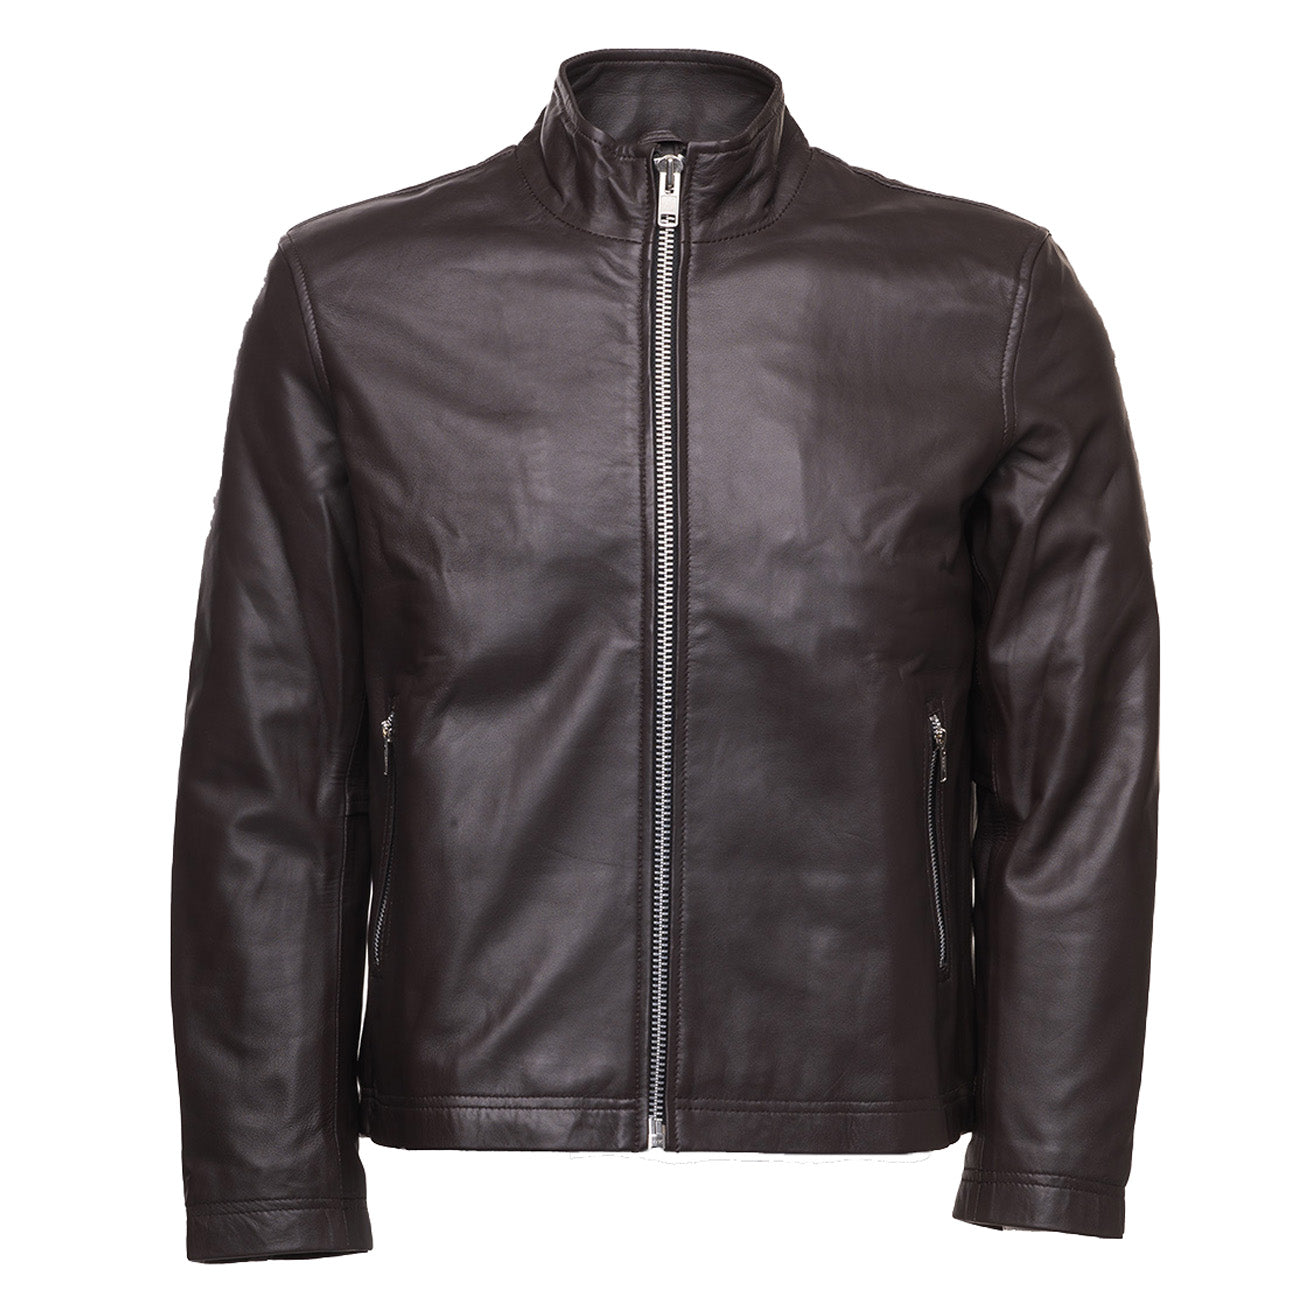 Henry Mateo Dark Brown leather jacket